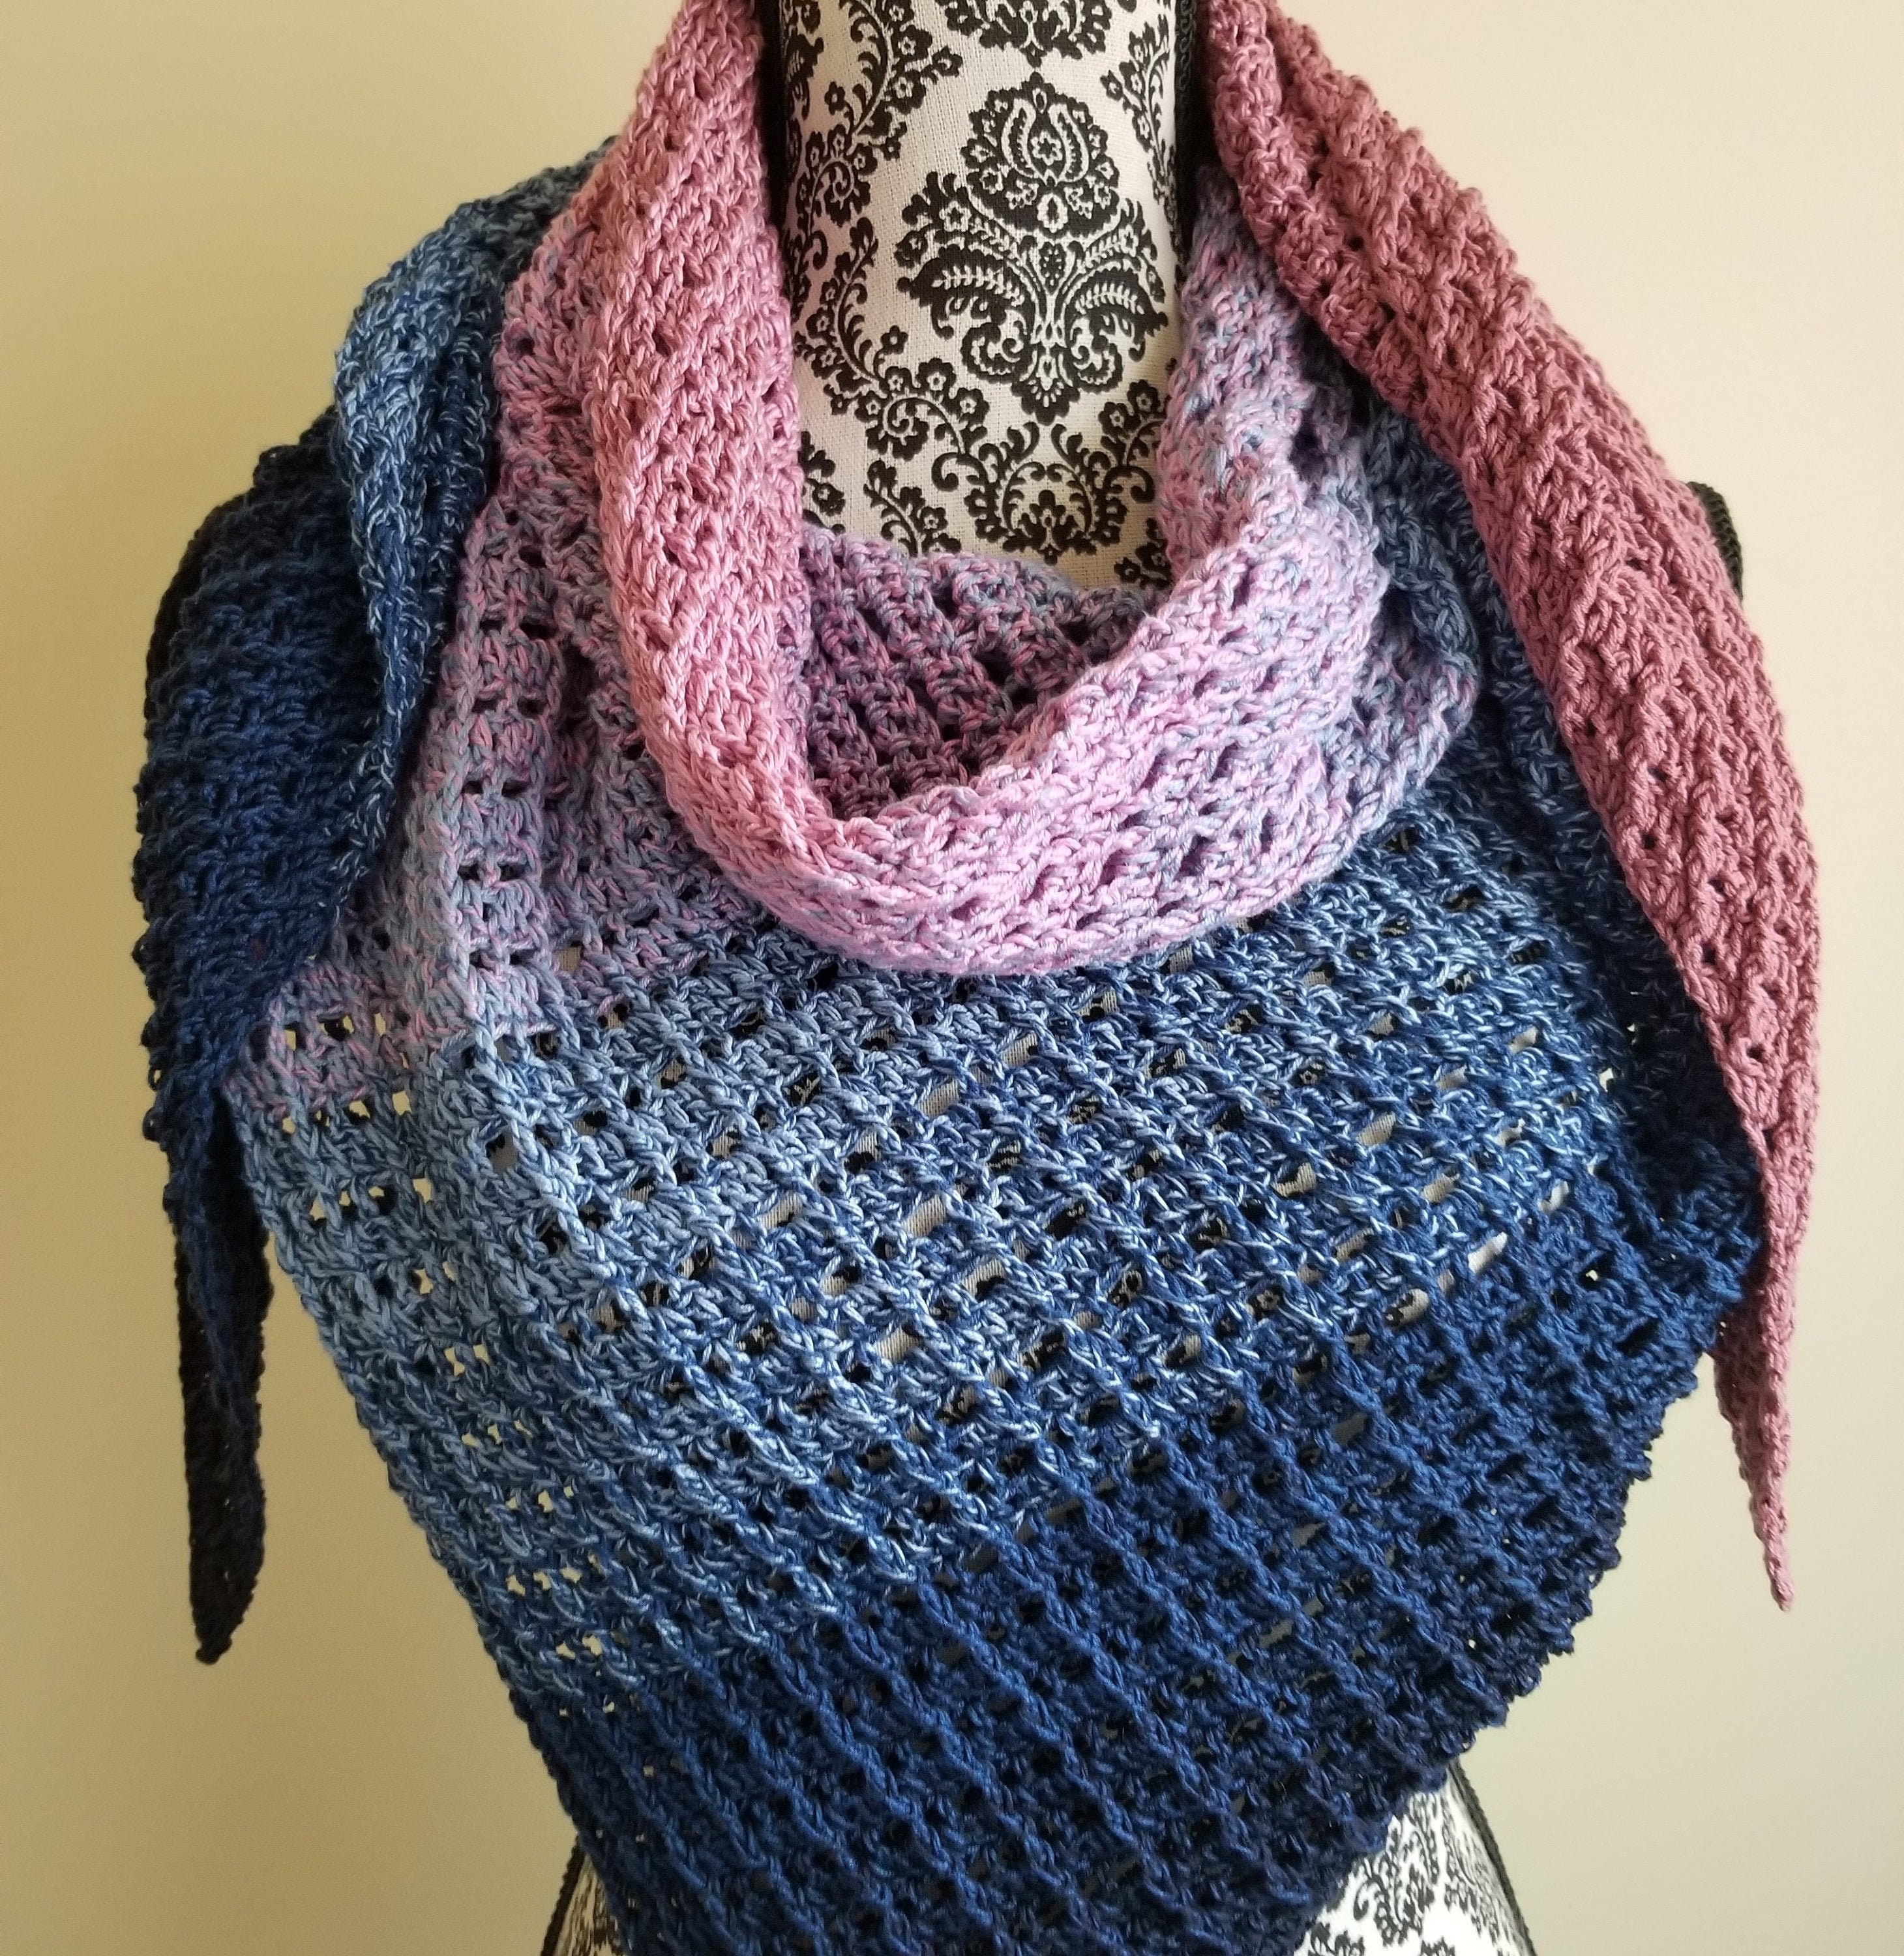 Handmade handmade scarf cloth triangular scarf unique blue pink large crocheted